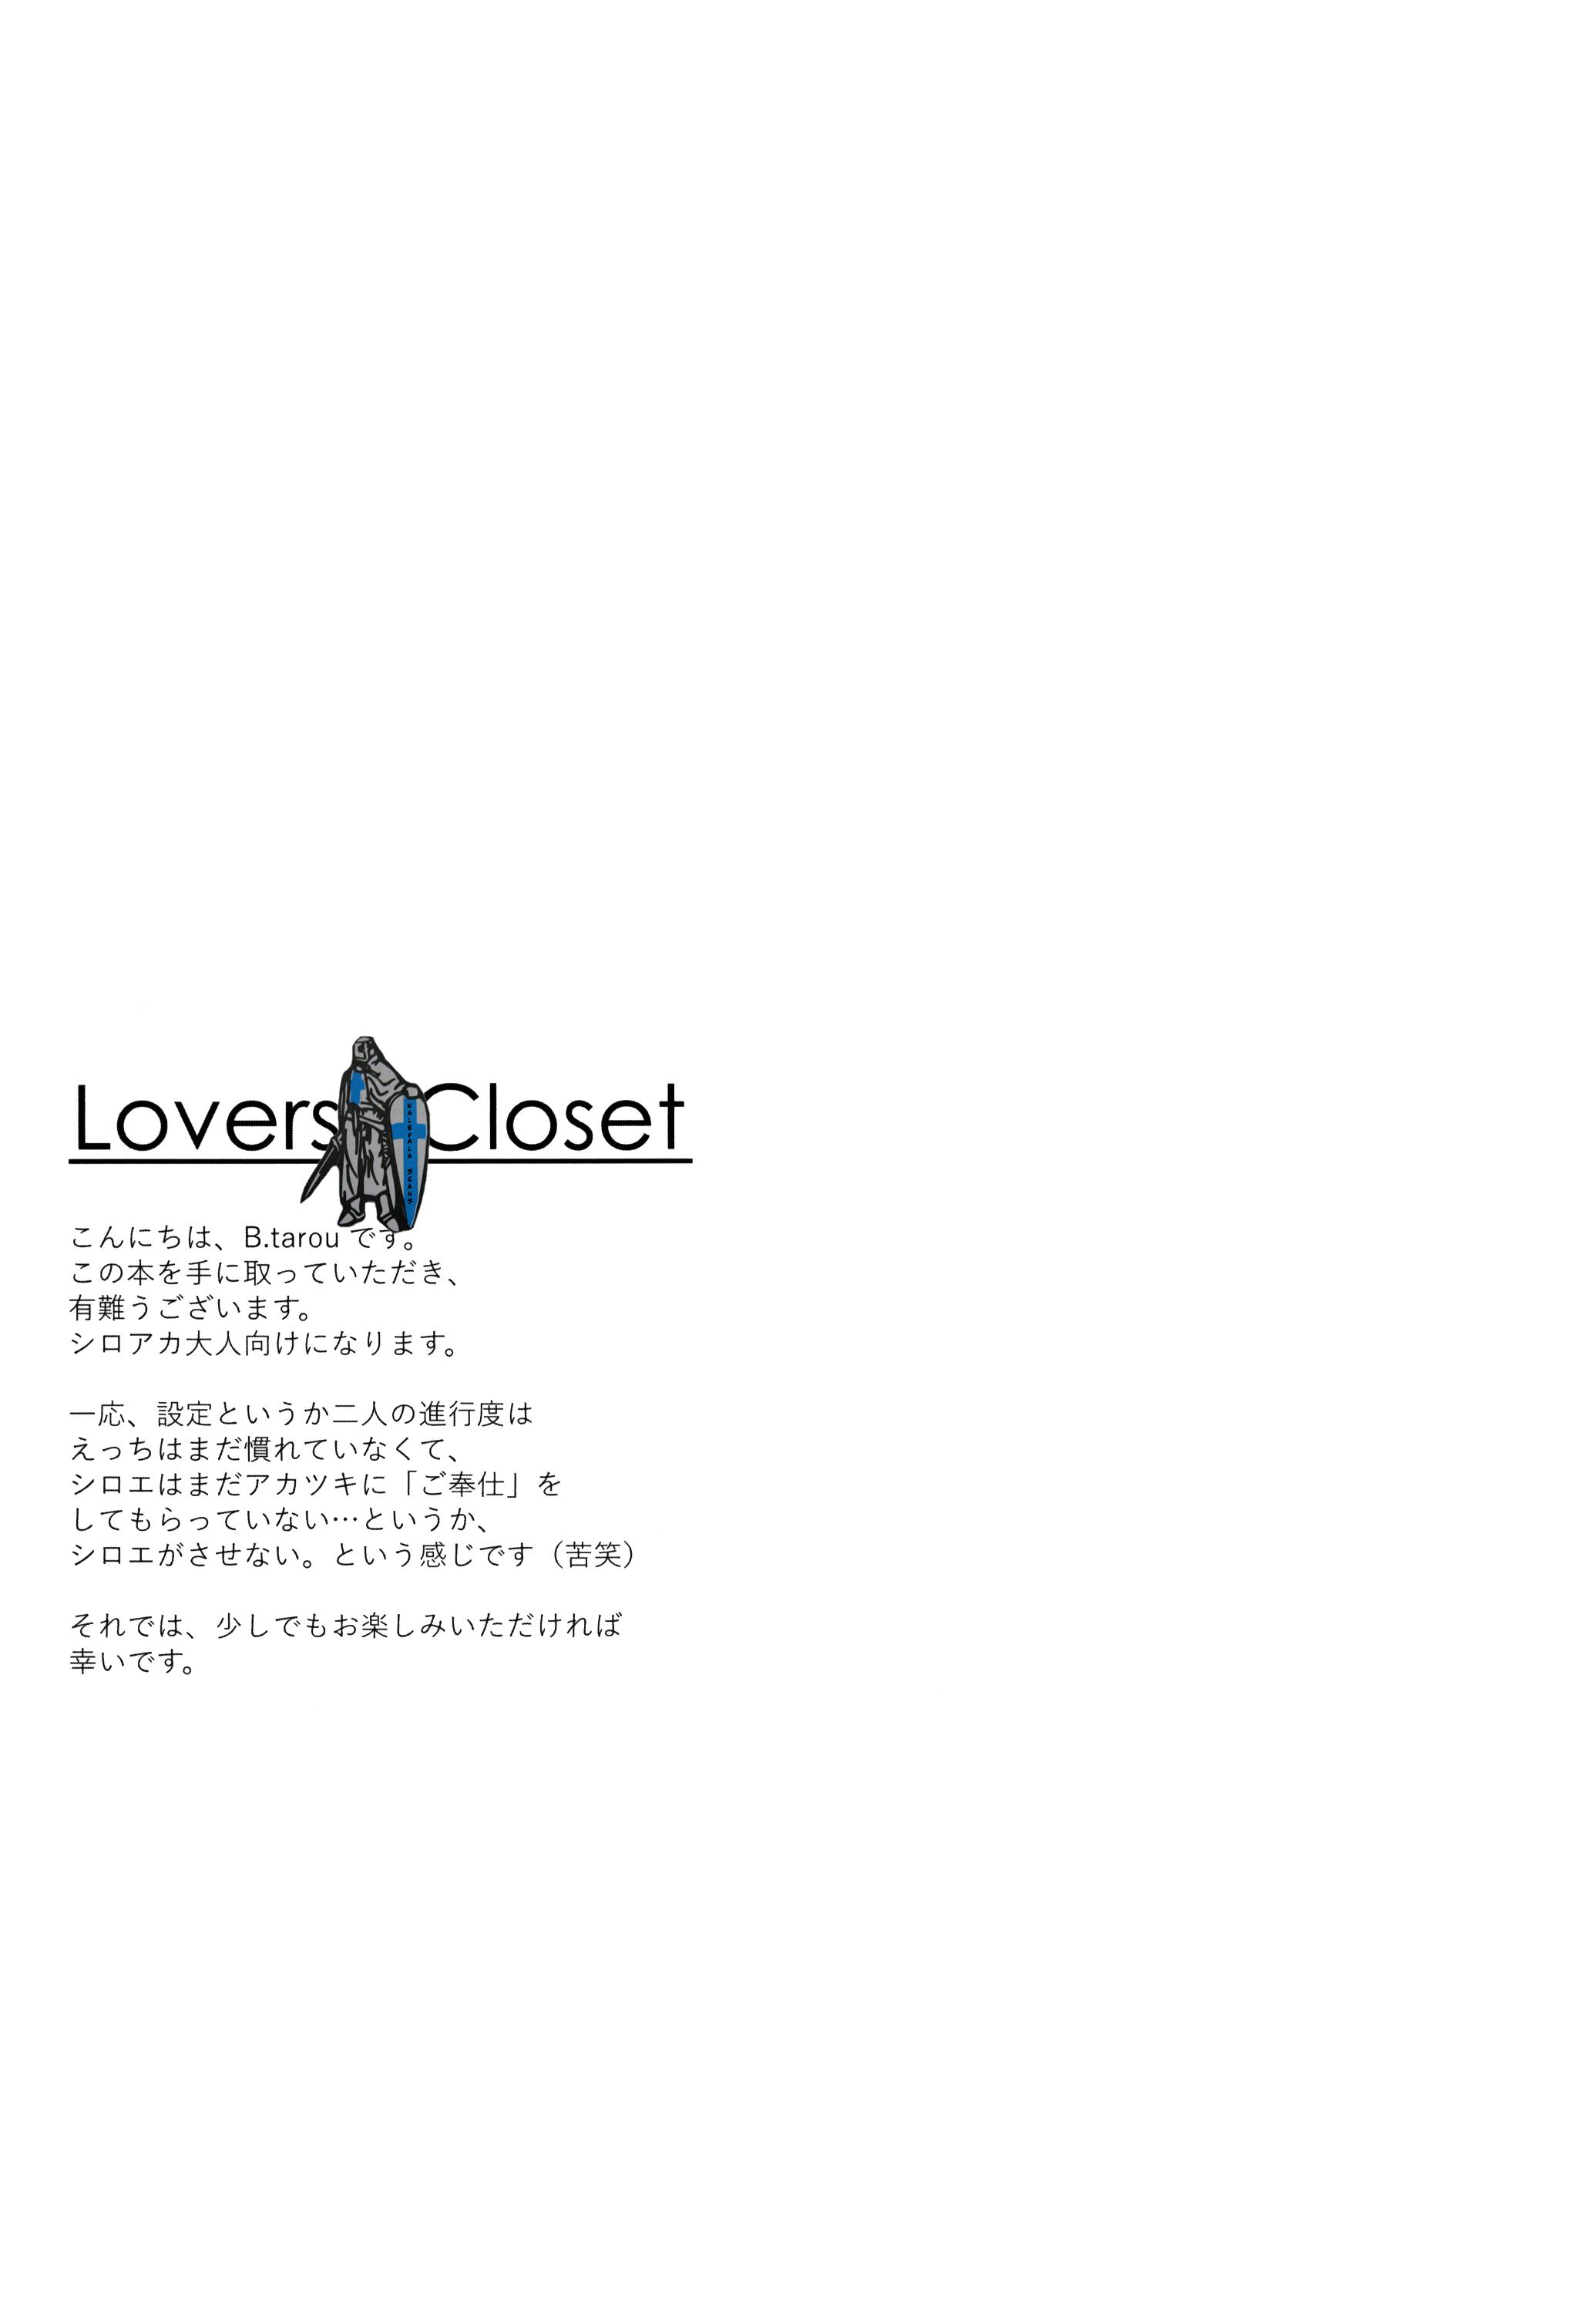 Lovers Closet 2